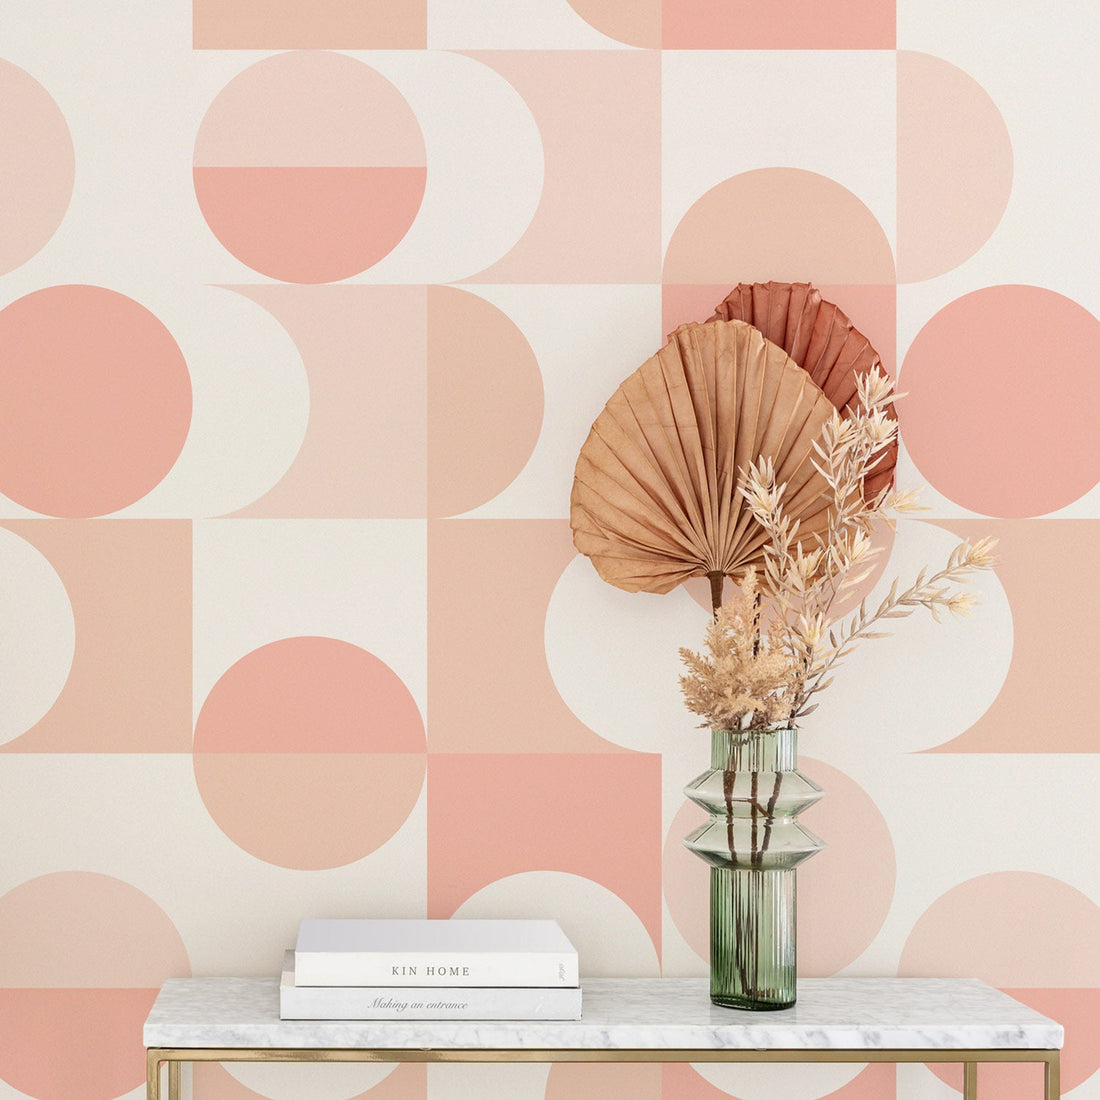 retro inspired pastel geometric shapes wallpaper design